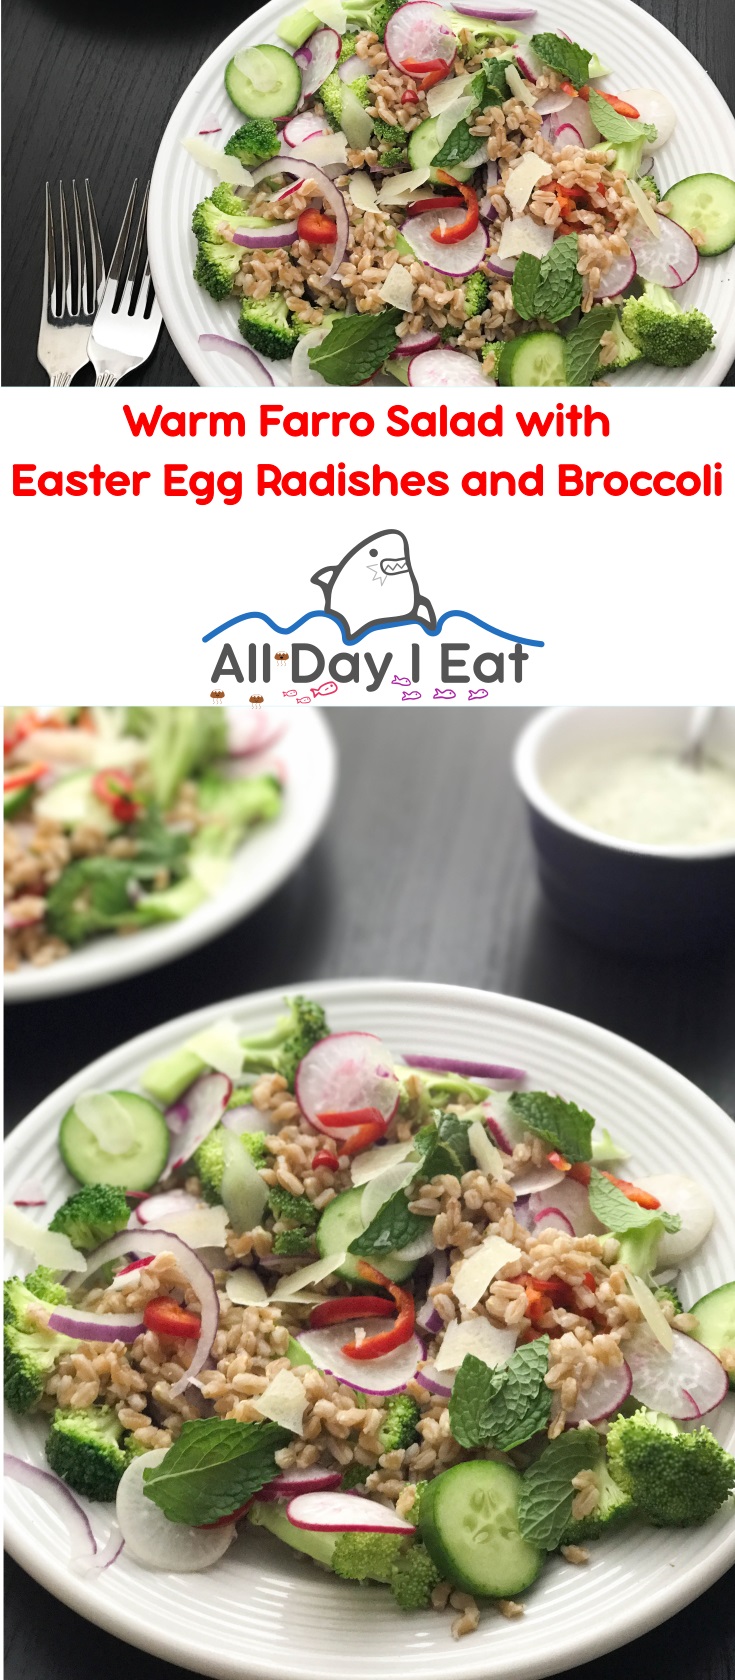 Warm Farro Salad with Easter Egg Radishes and Broccoli | www.alldayieat.com